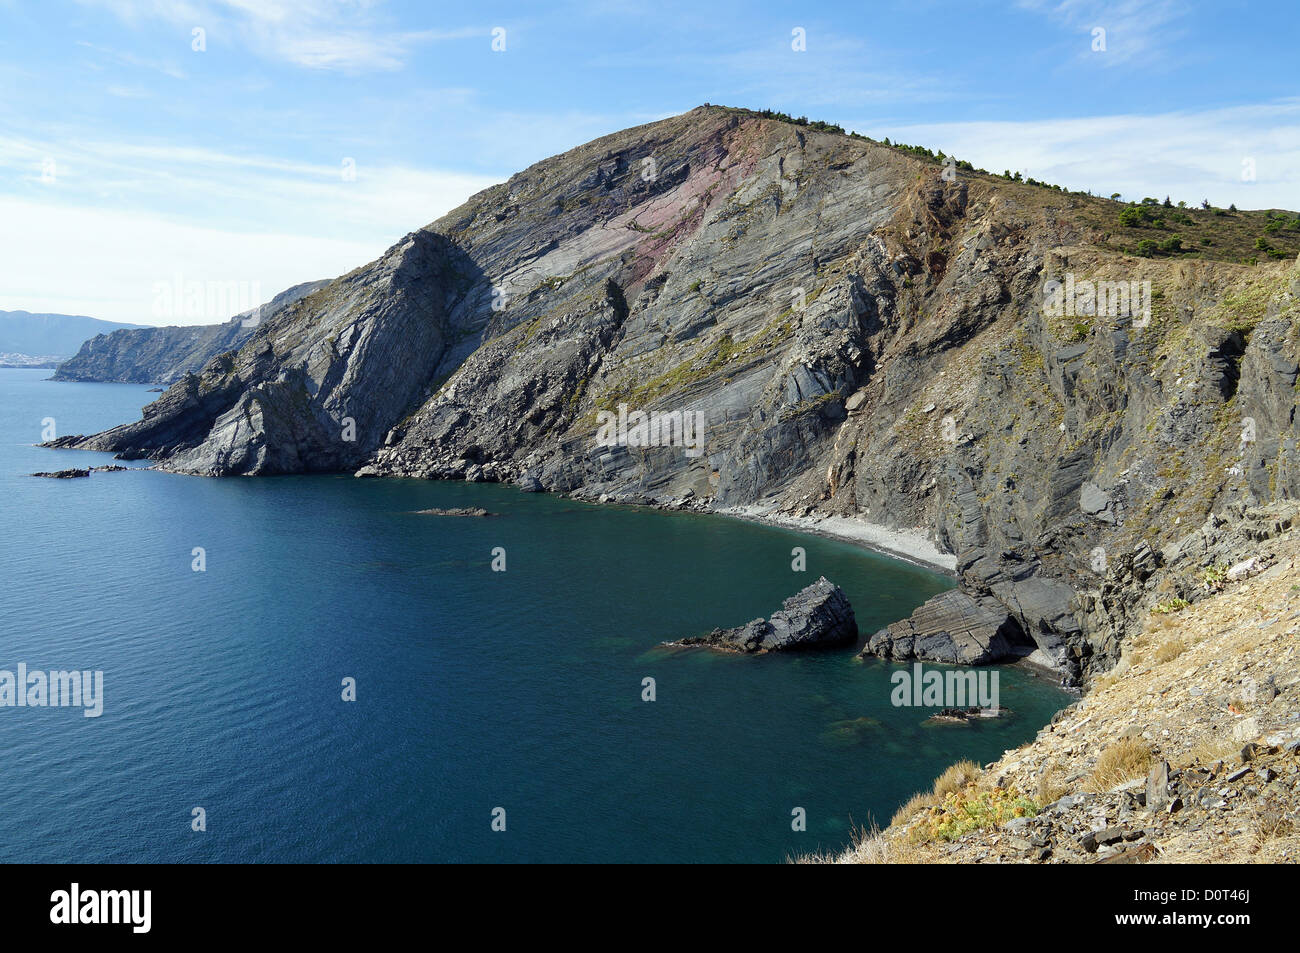 Coastal cliff at the border between Spain and France, Mediterranean sea, Cap Cerbere, Catalonia Stock Photo